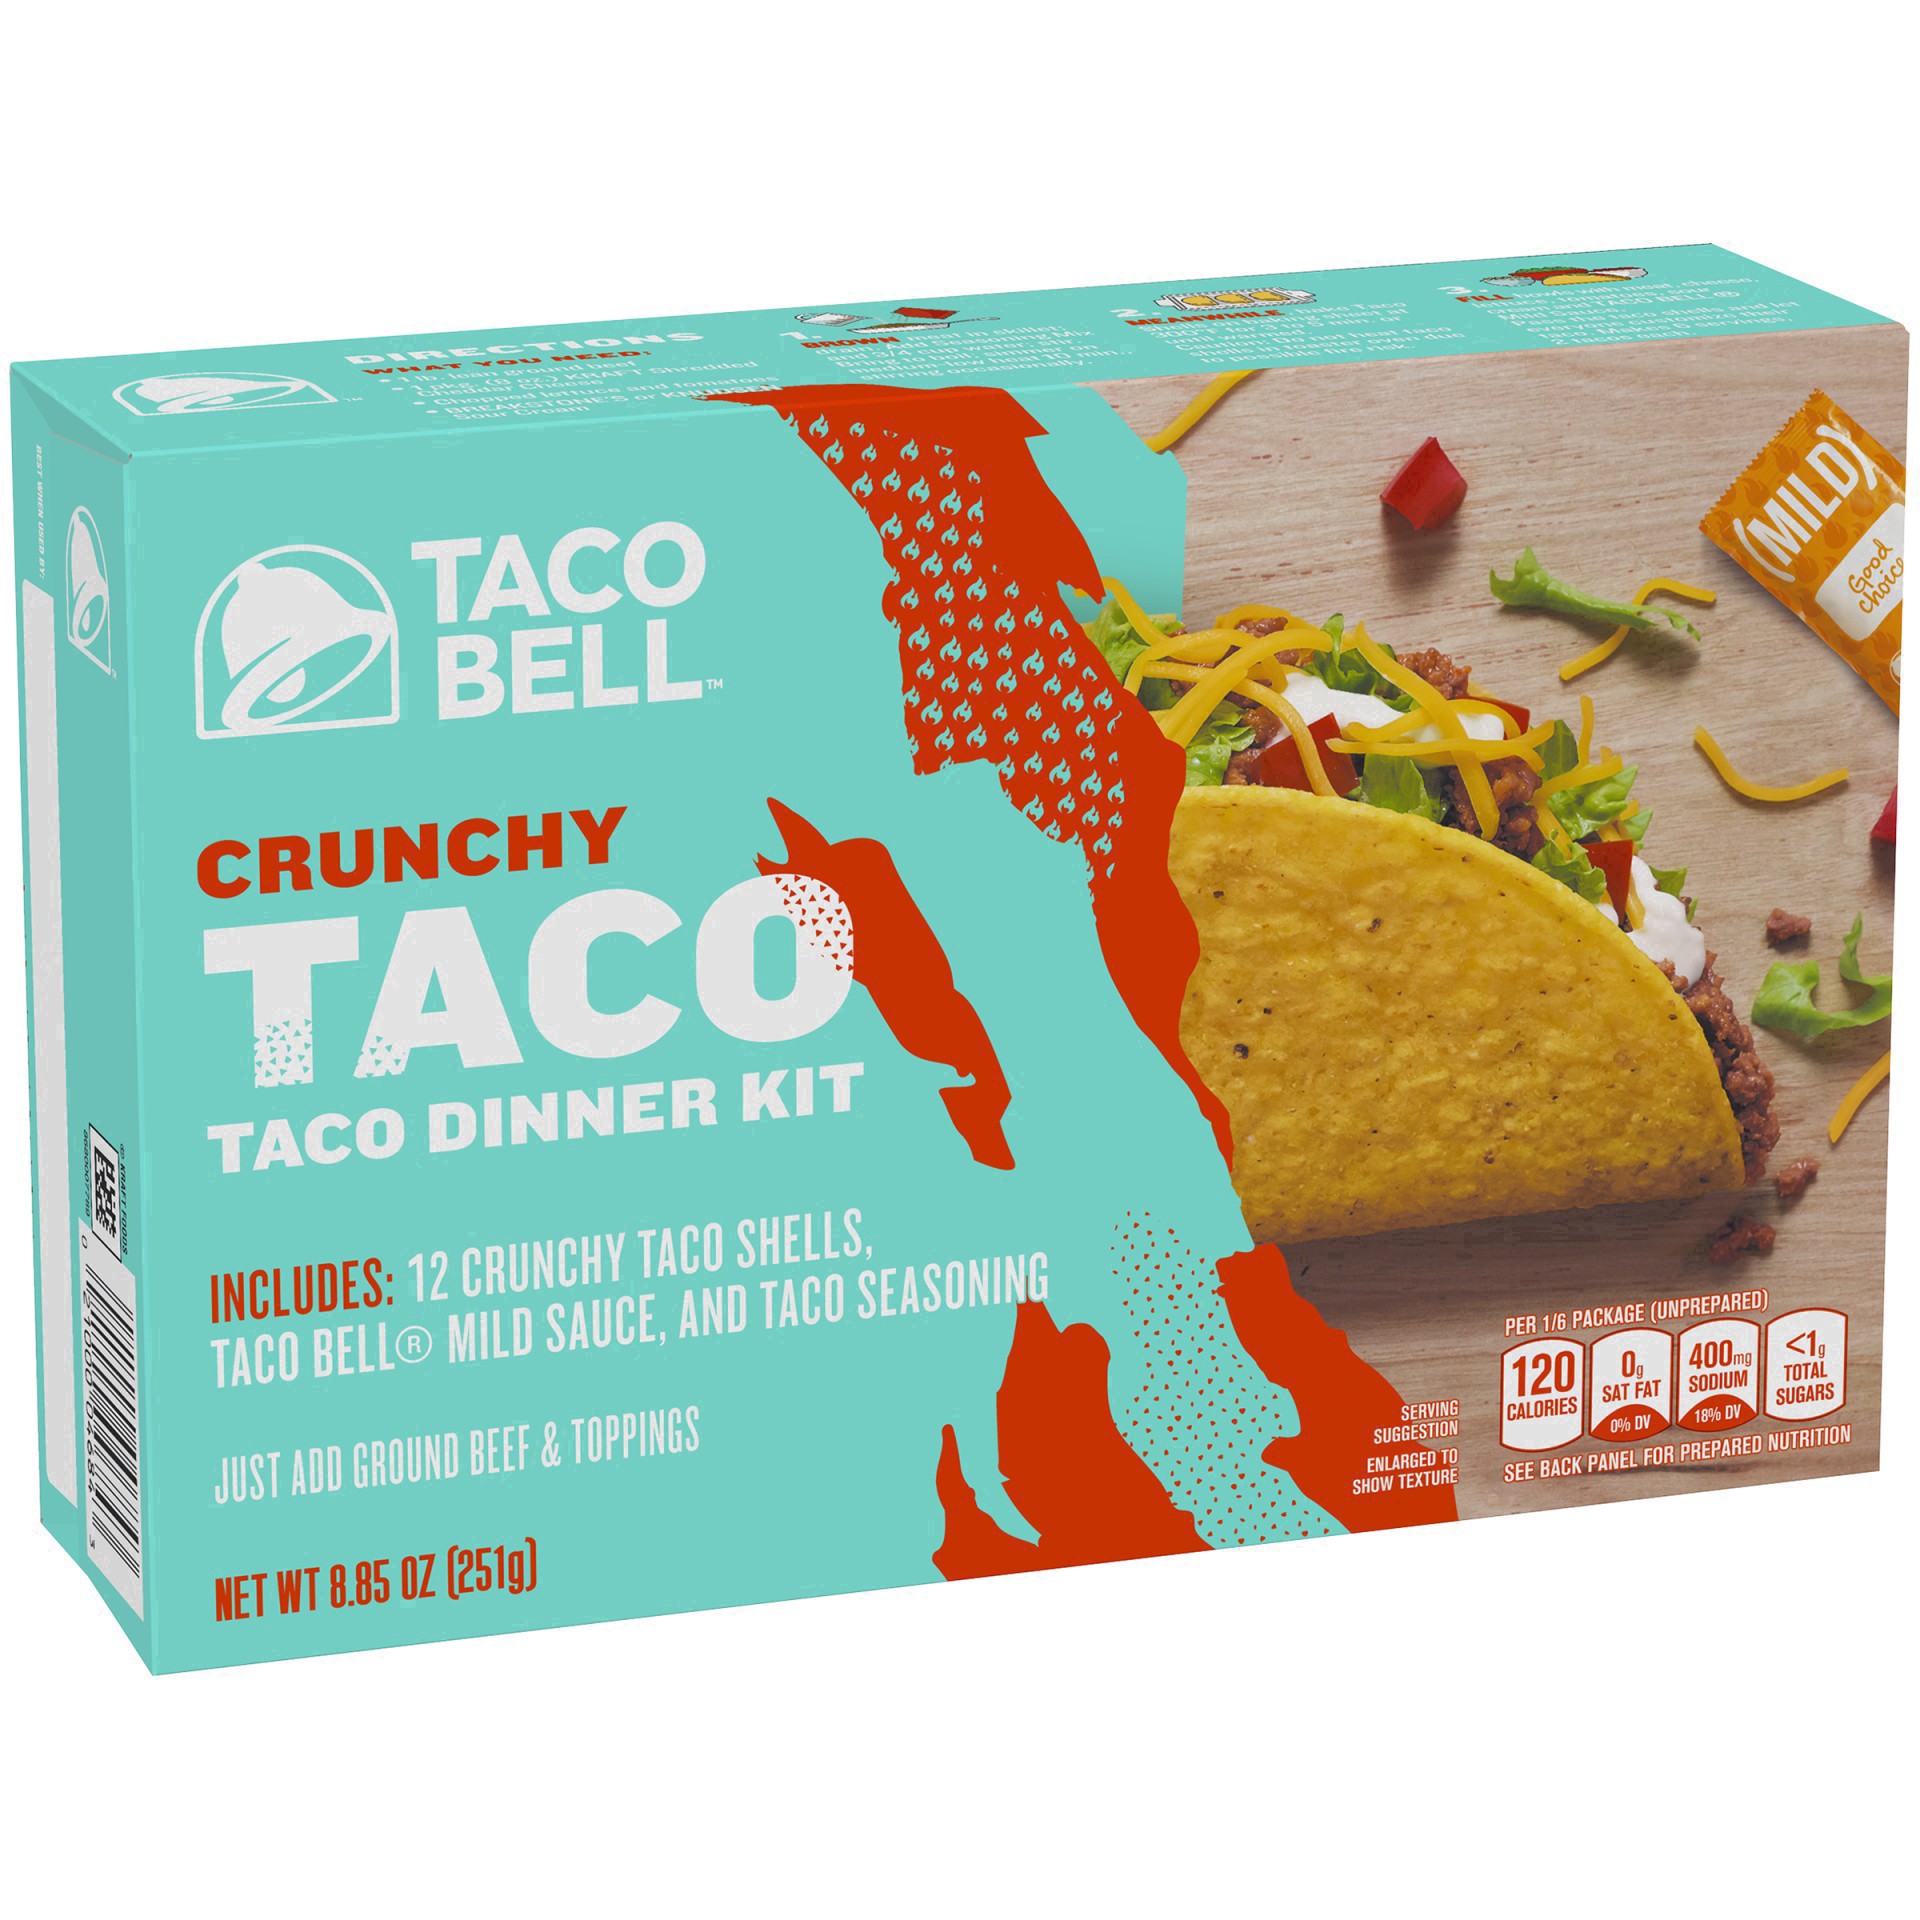 slide 87 of 91, Taco Bell Crunchy Taco Cravings Kit with 12 Crunchy Taco Shells, Taco Bell Mild Sauce & Seasoning, 8.85 oz Box, 1 ct